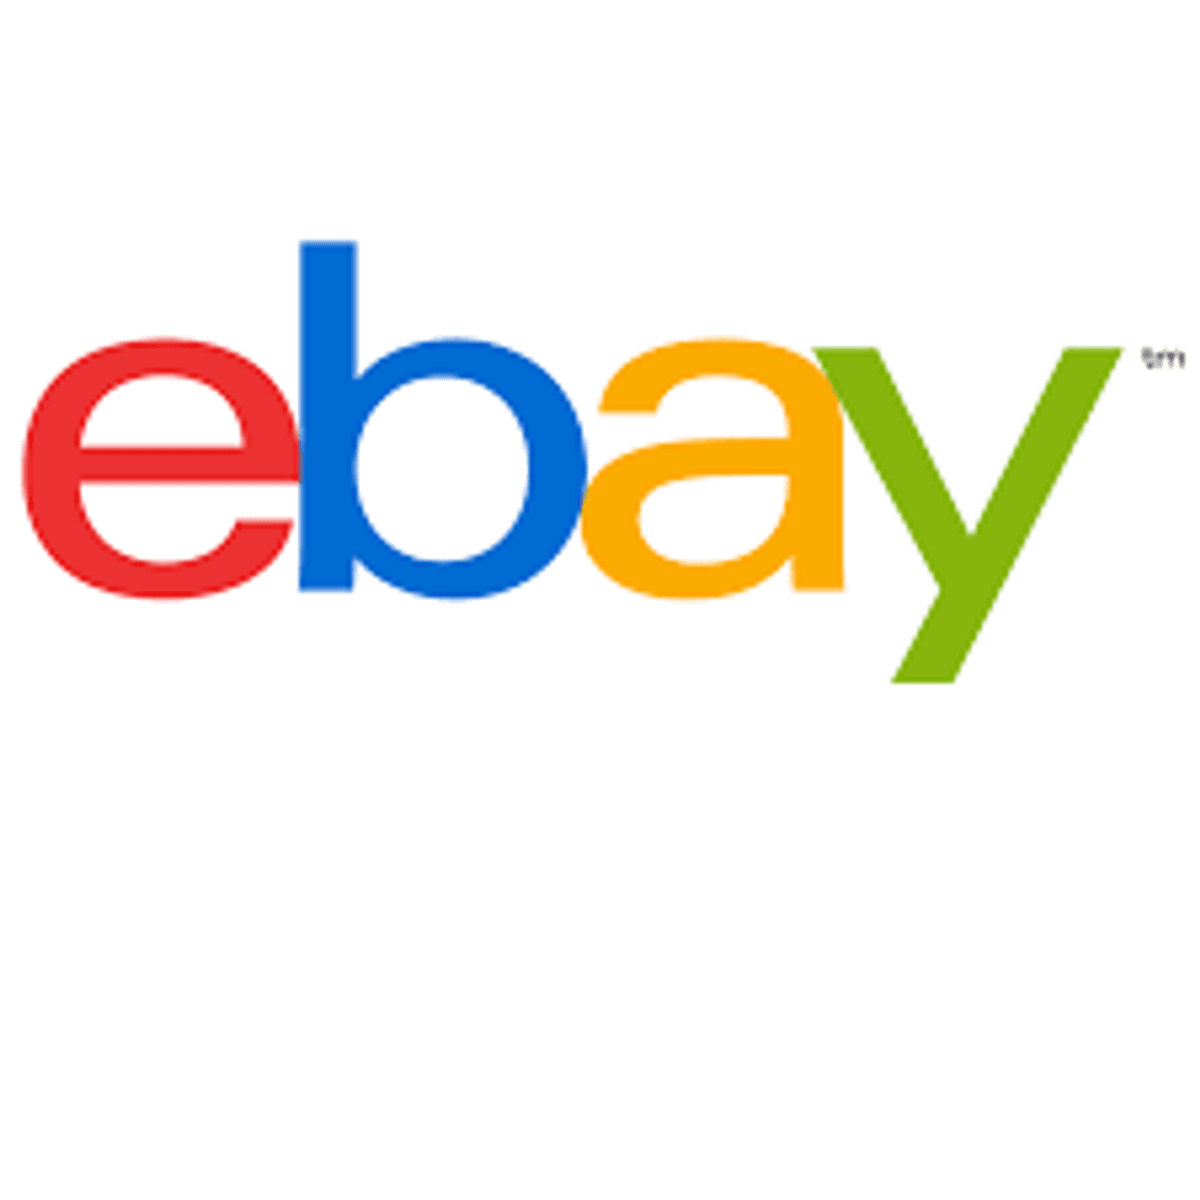 Ebay vervangt Paypal voor Adyen image